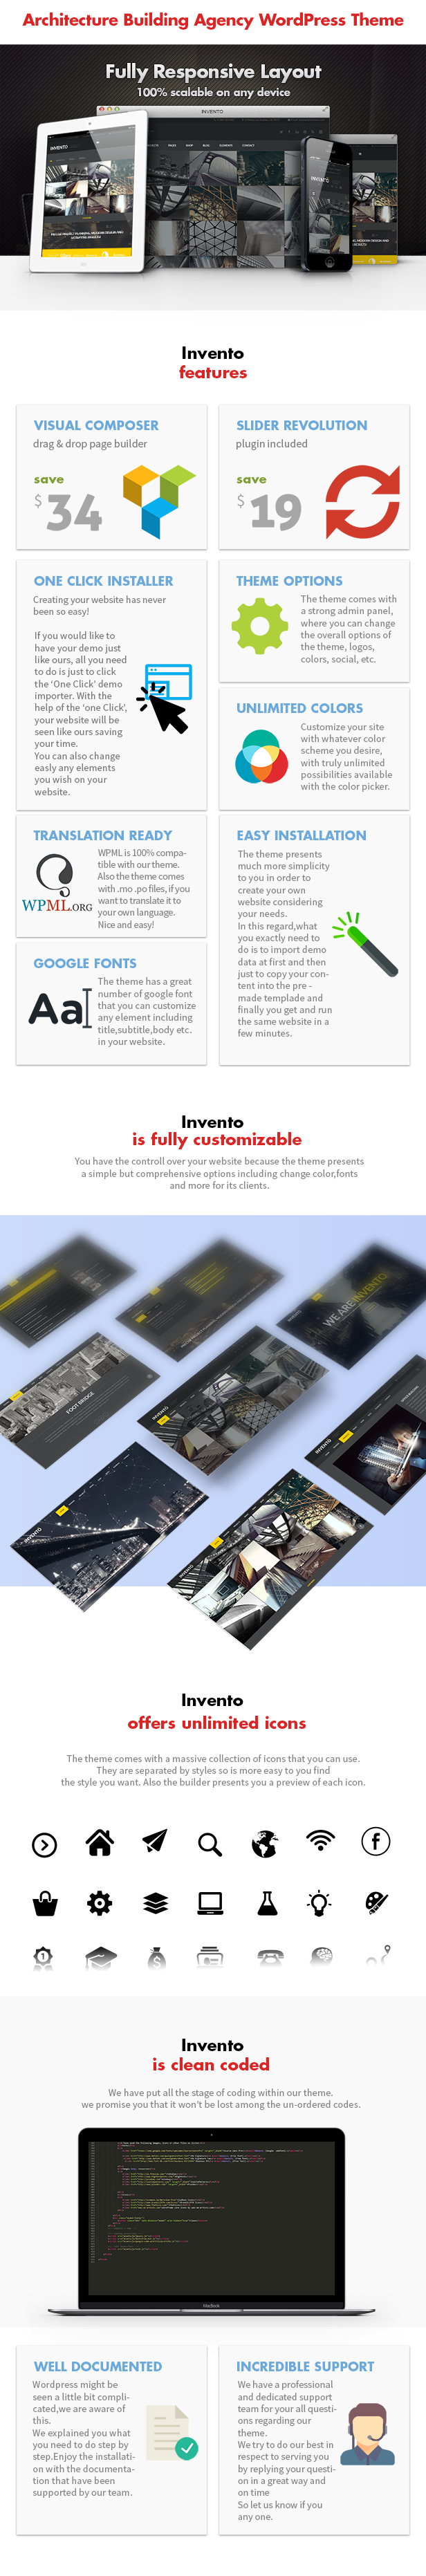 Invento | Architecture Agency Theme - 3